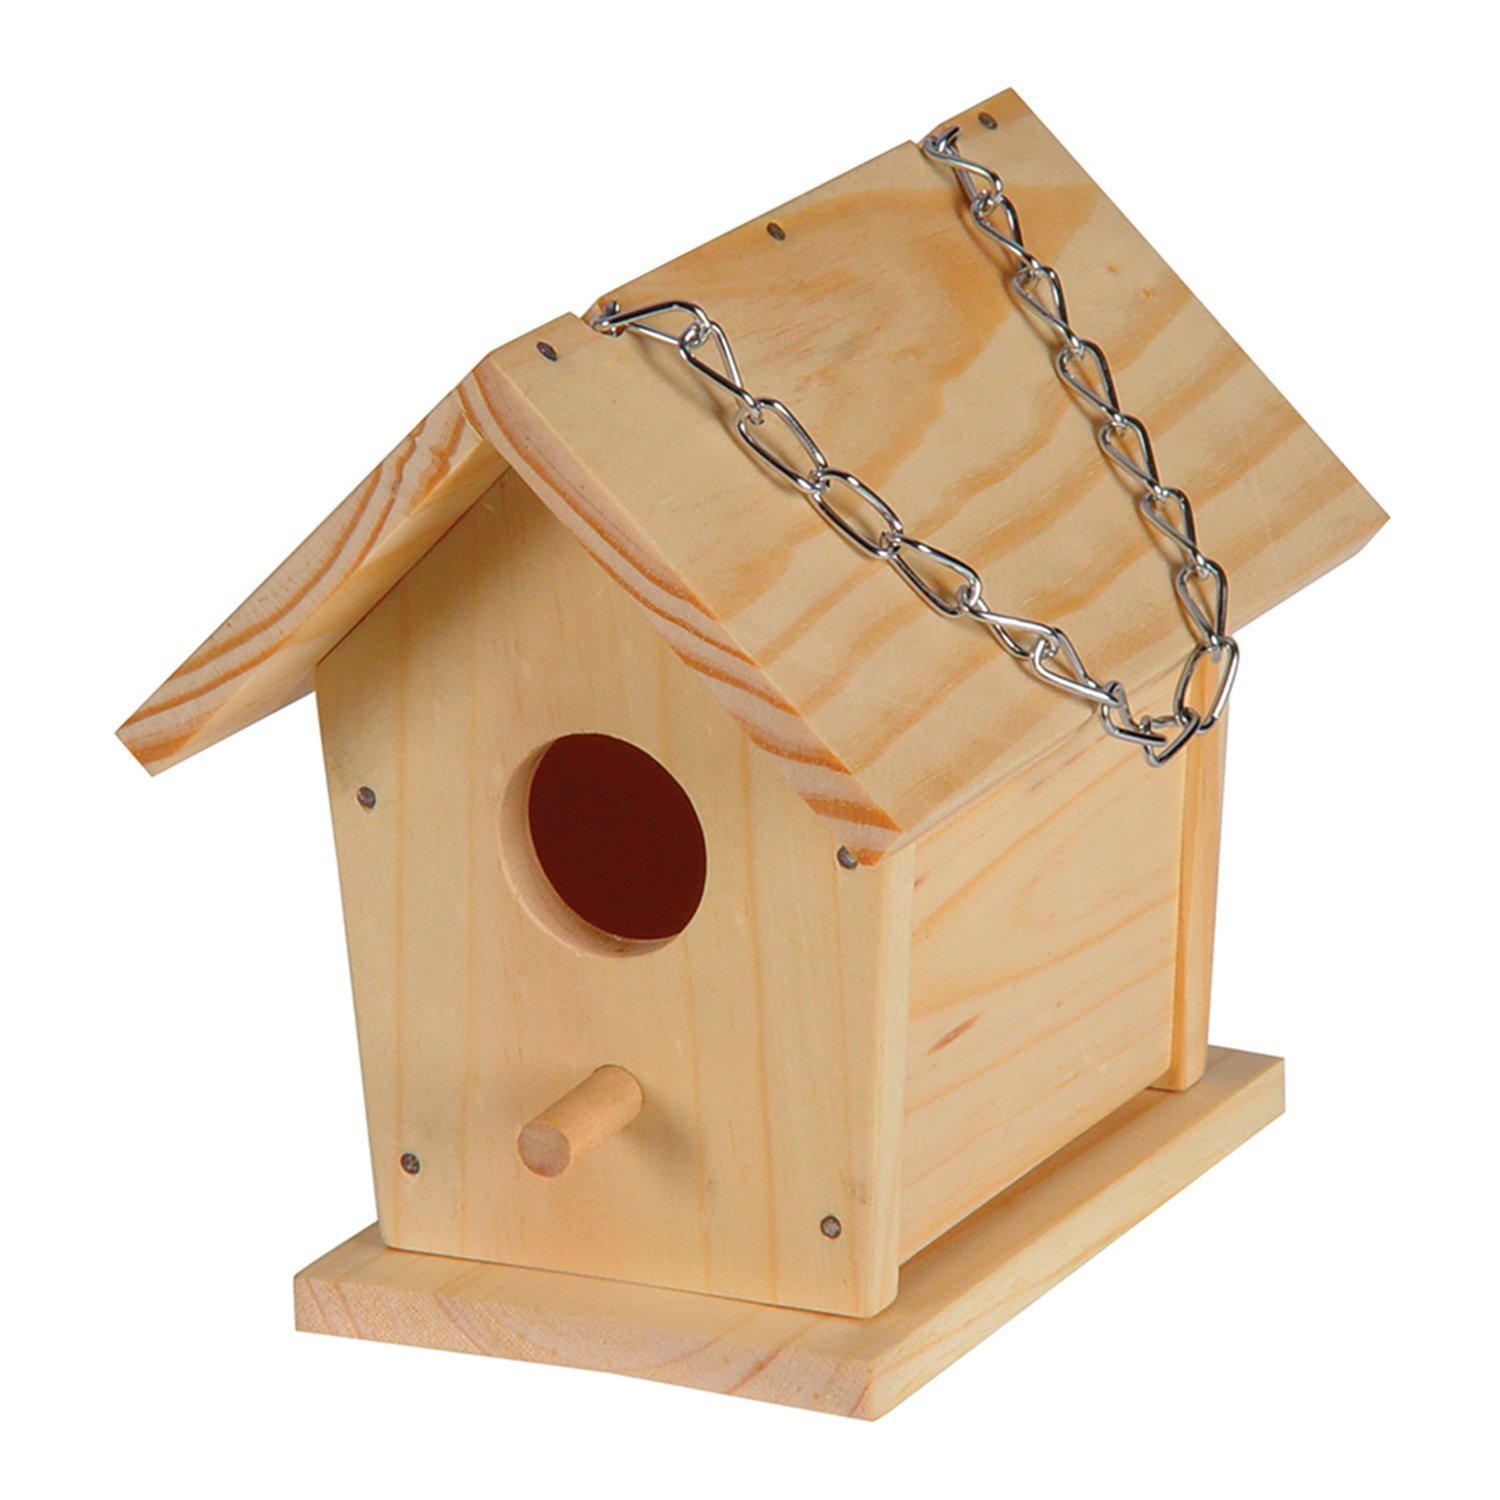 Amazon.com : Toysmith Build a Bird House : Childrens Wood Craft Kits ...